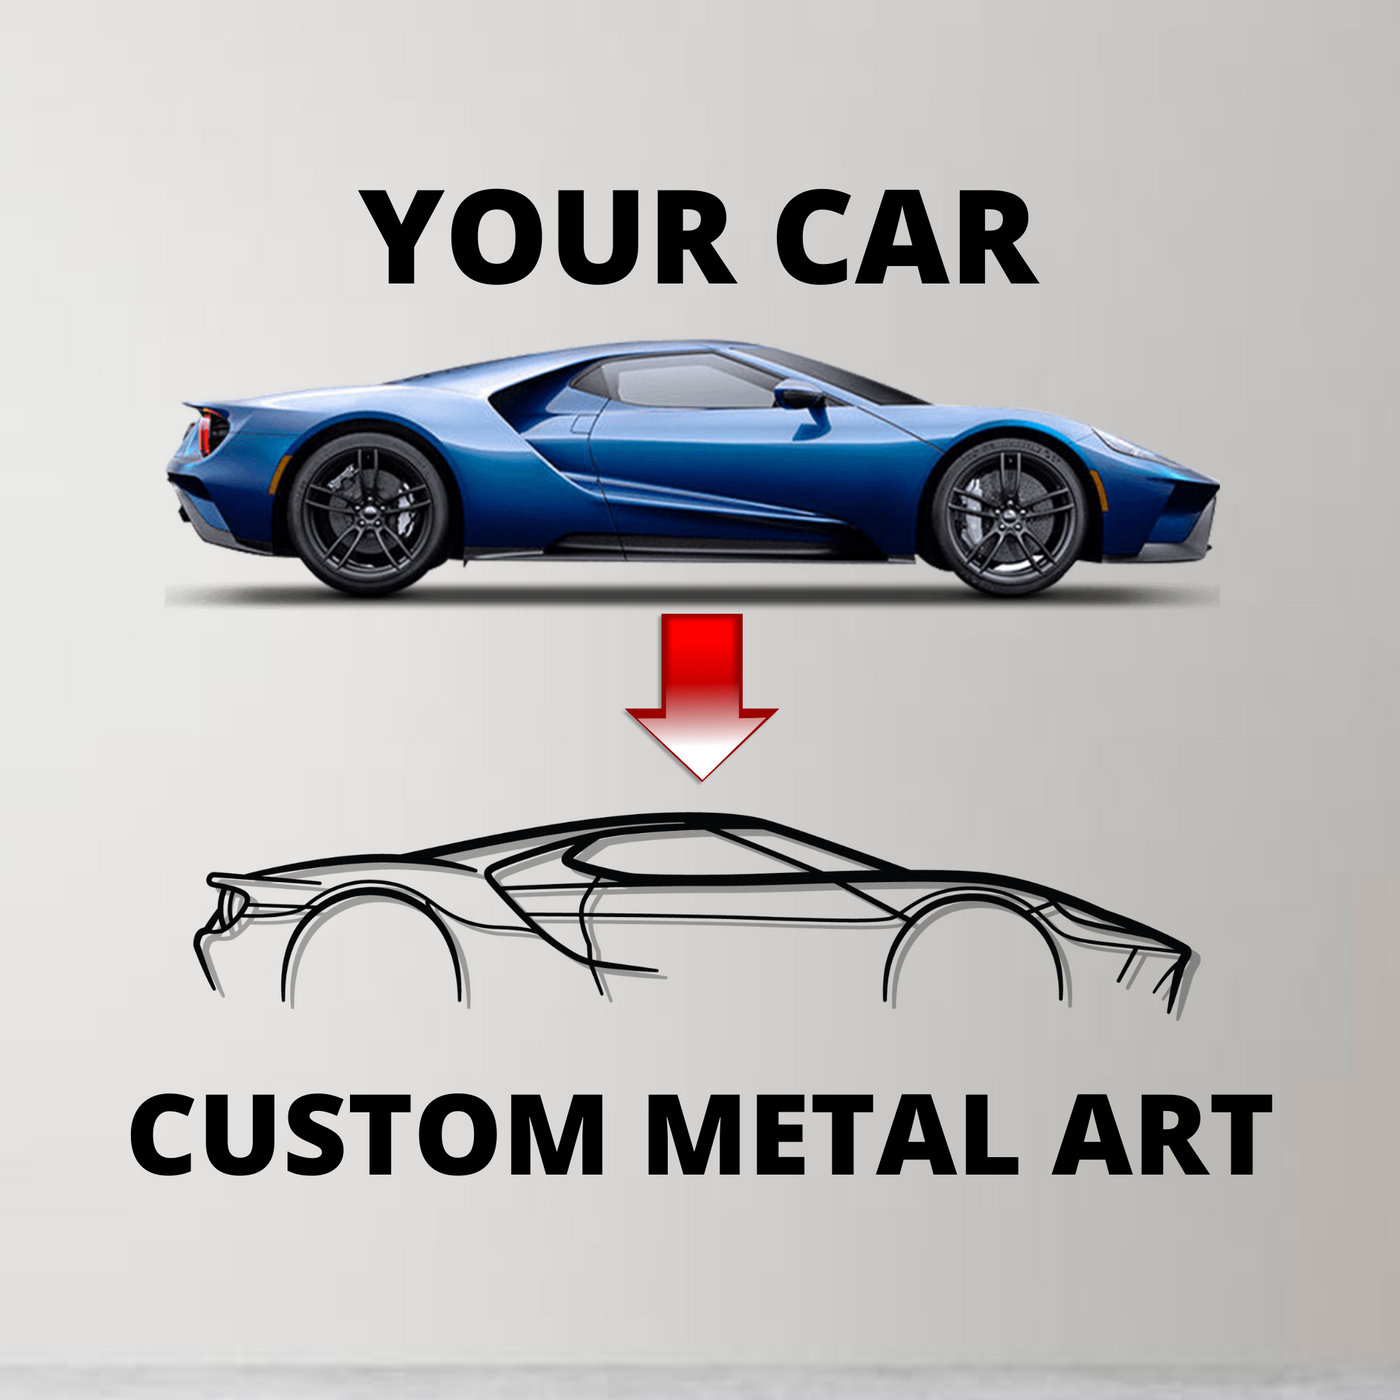 205 GTI Detailed Silhouette Metal Wall Art